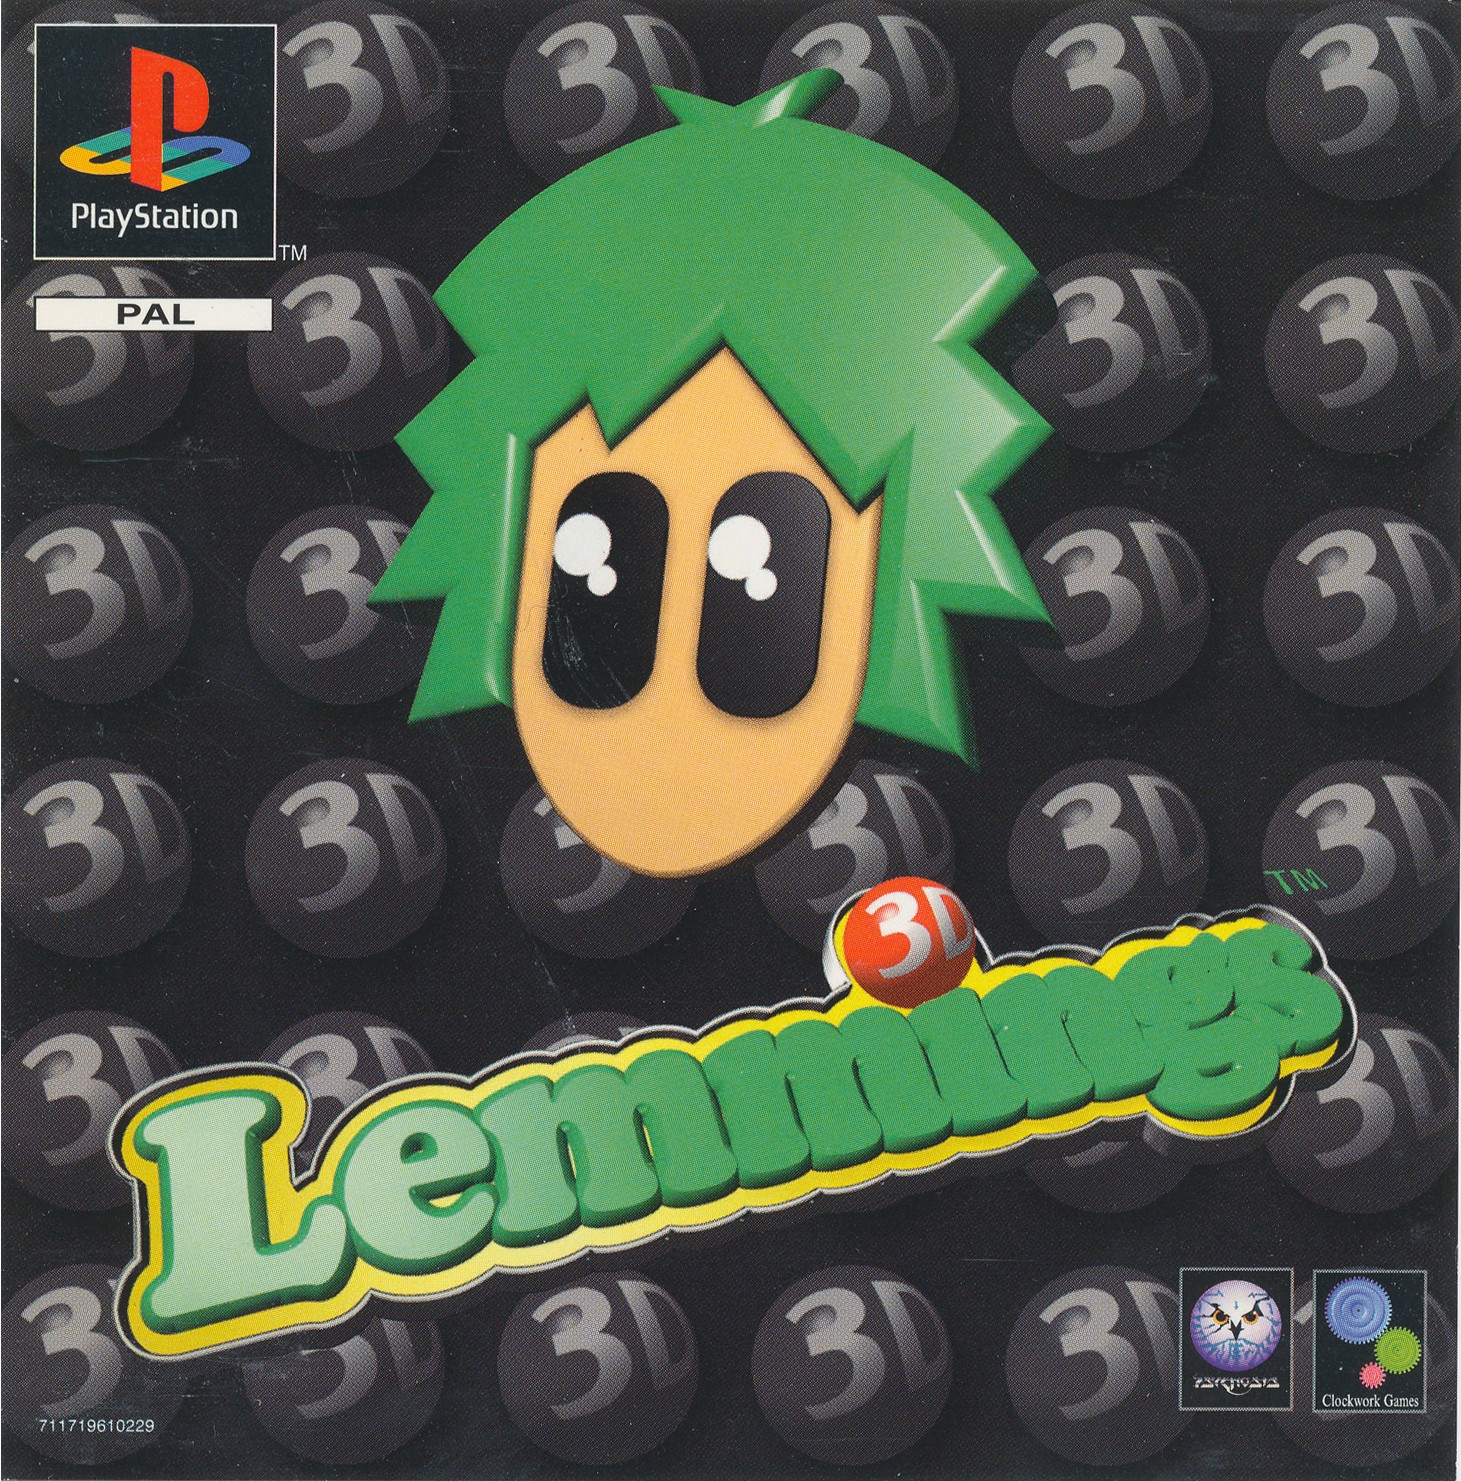 Lemmings 3D PSX cover